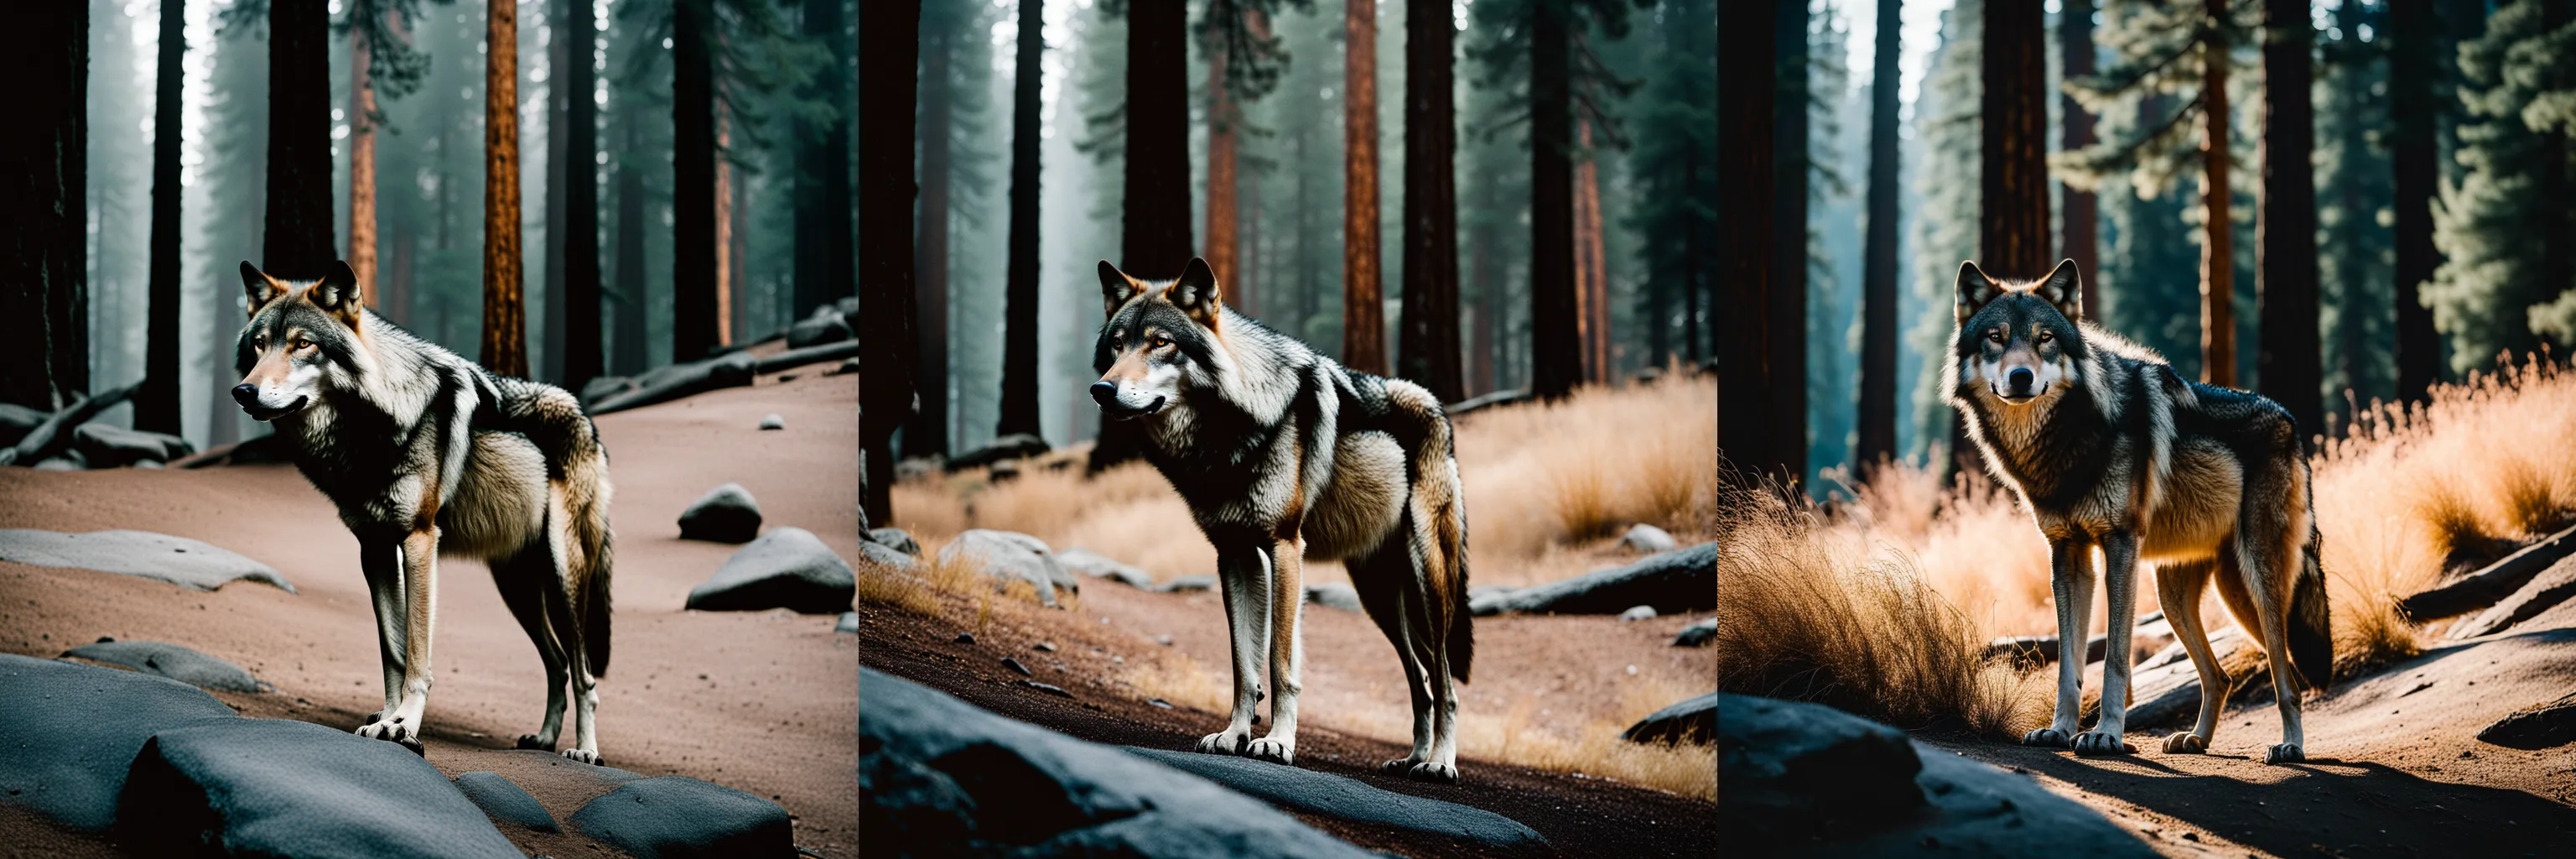 A wolf in Yosemite National Park, chilly nature documentary film photography - Волк в национальном парке Йосемити, холодная документальная киносъемка природы